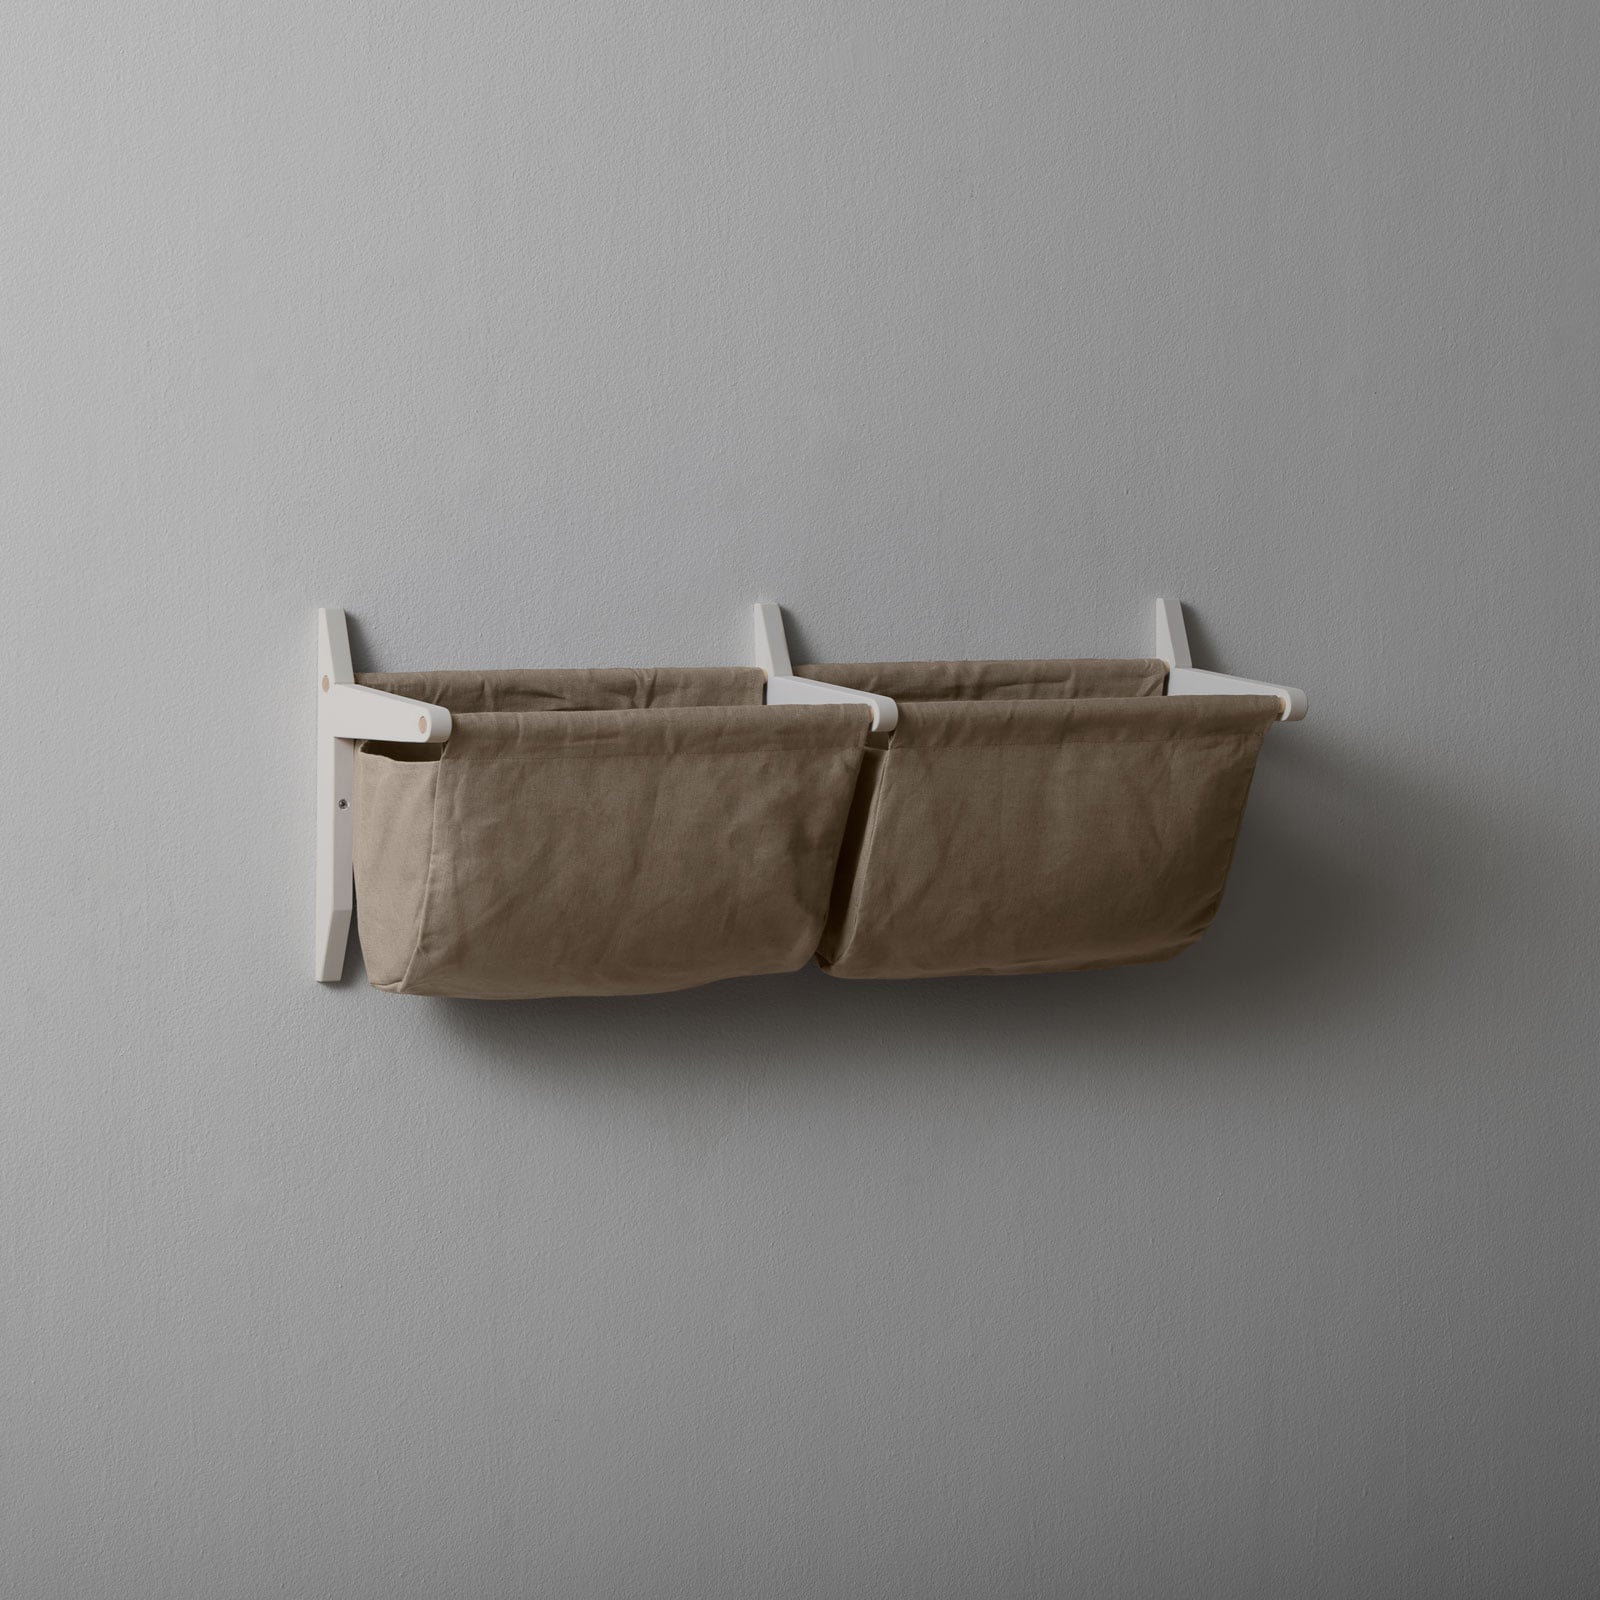 Bag Shelf horizontal with 2 bags